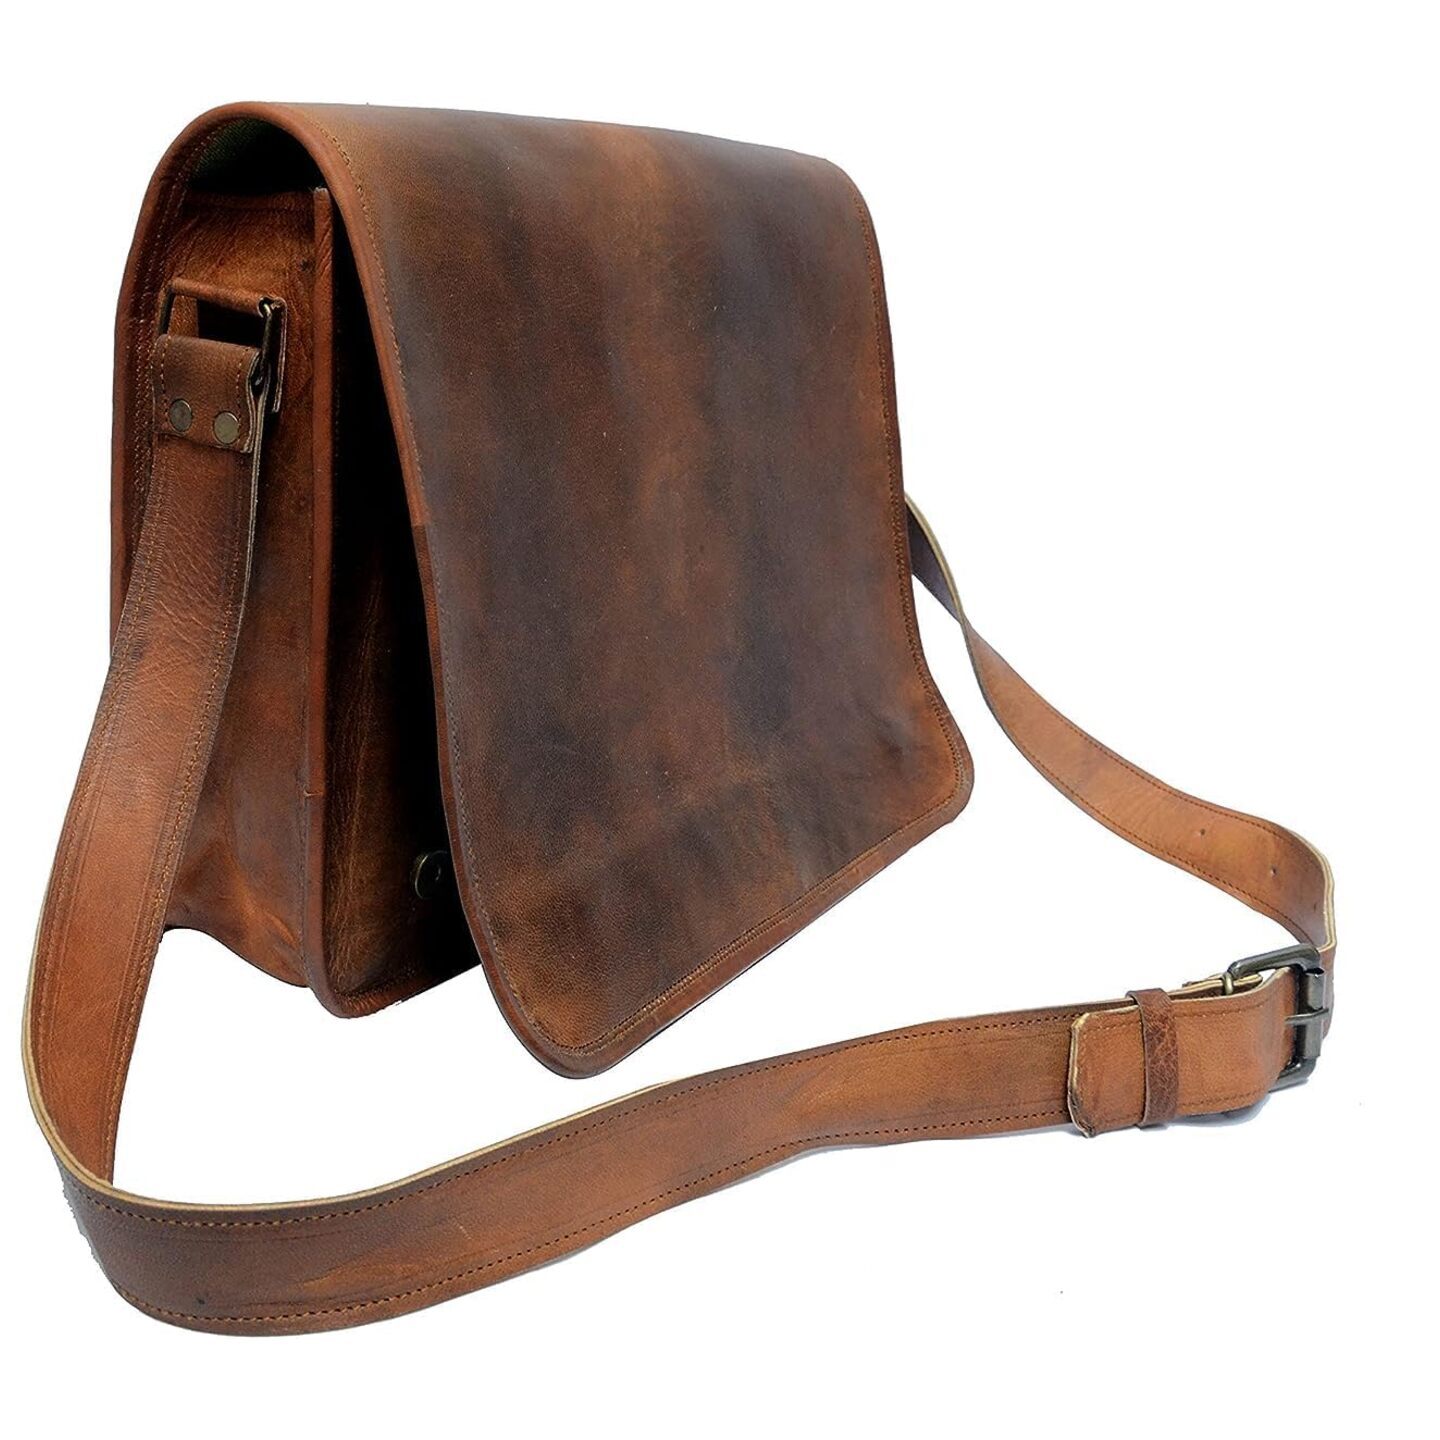 Handmade Leather Messenger Bag for Laptop - Briefcase Satchel for Men and Women - Padded Satchel Laptop Bag